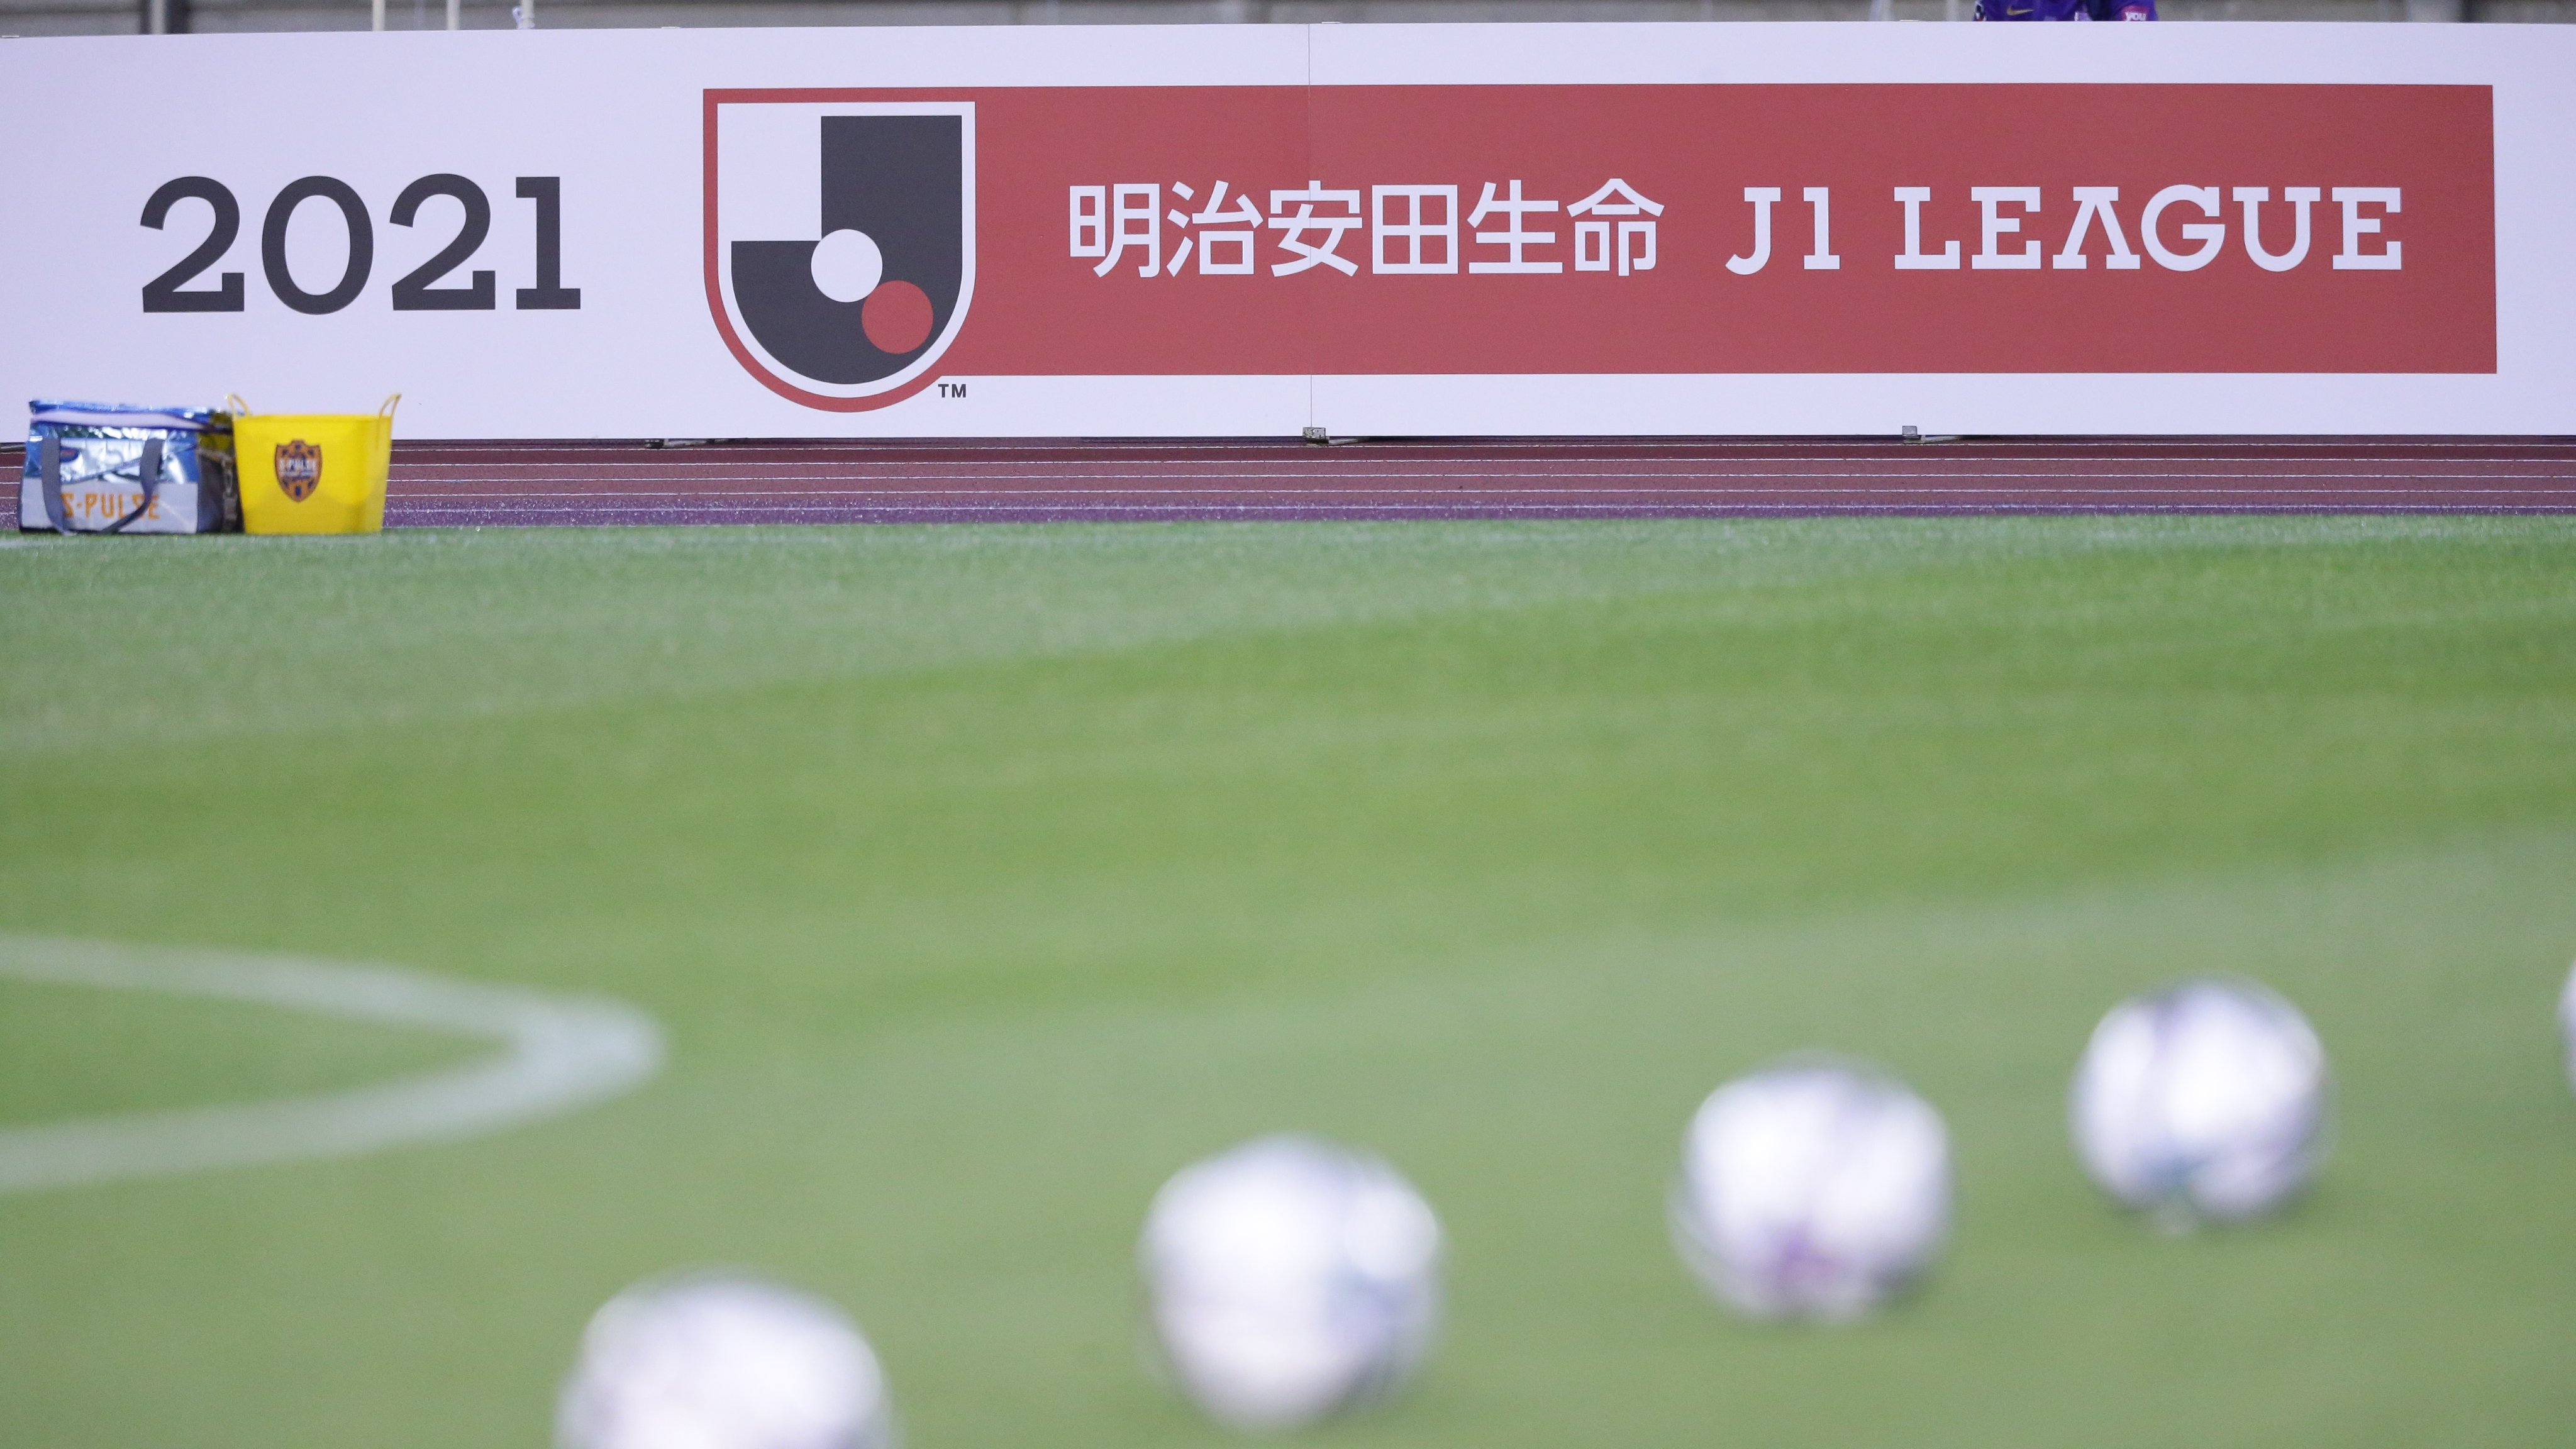 Laga Digelar Tanpa Penonton, J.League Akan Minta Ganti Rugi ke Pemerintah Jepang